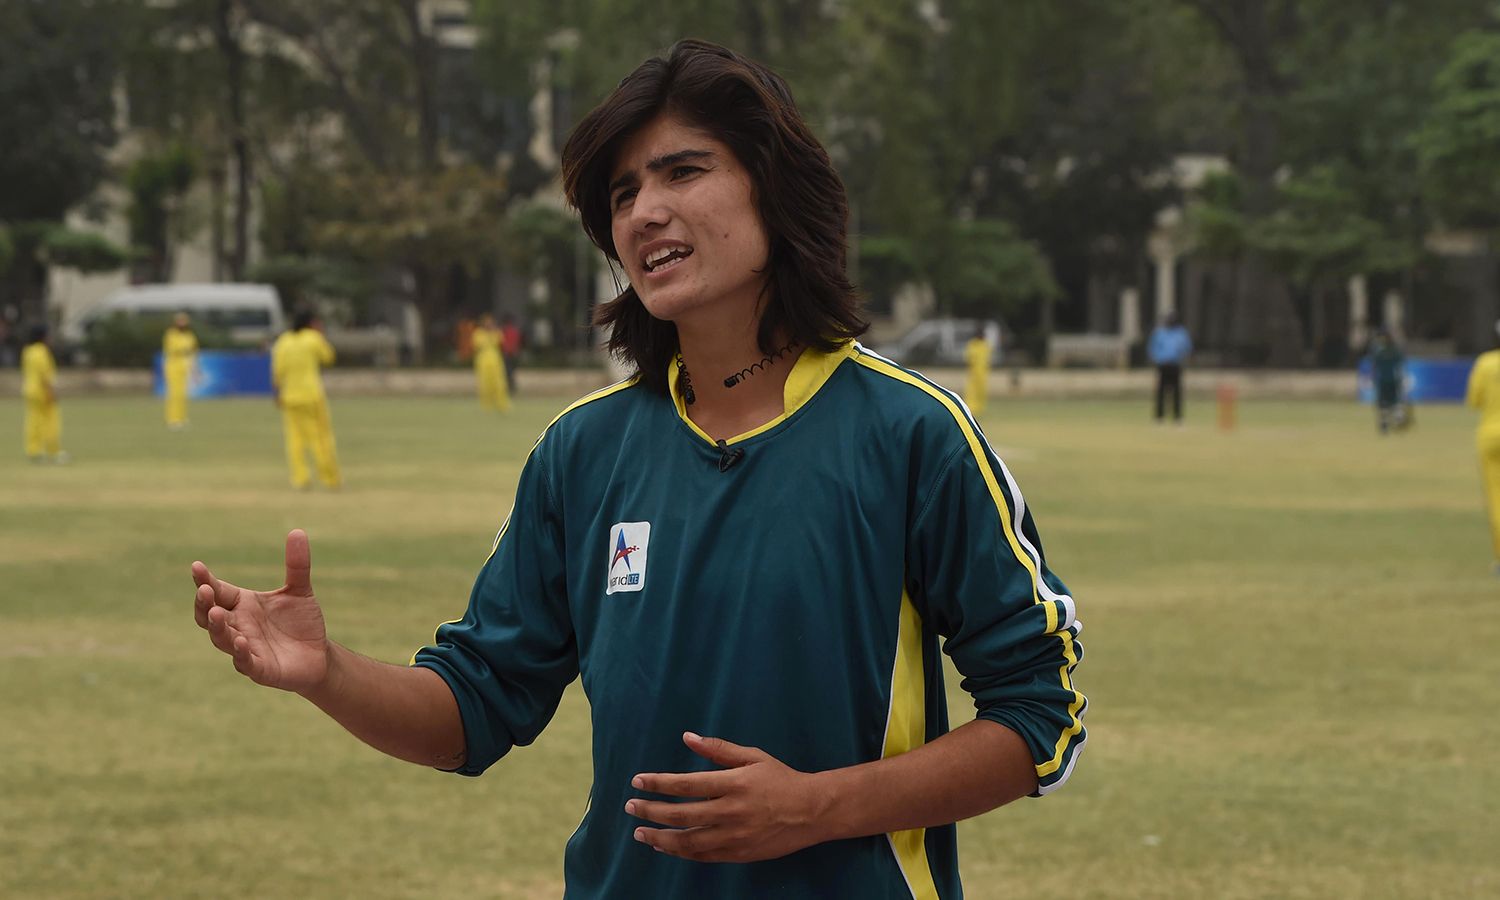 Meet Diana Baig, who plays both cricket and football for Pakistan's national teams